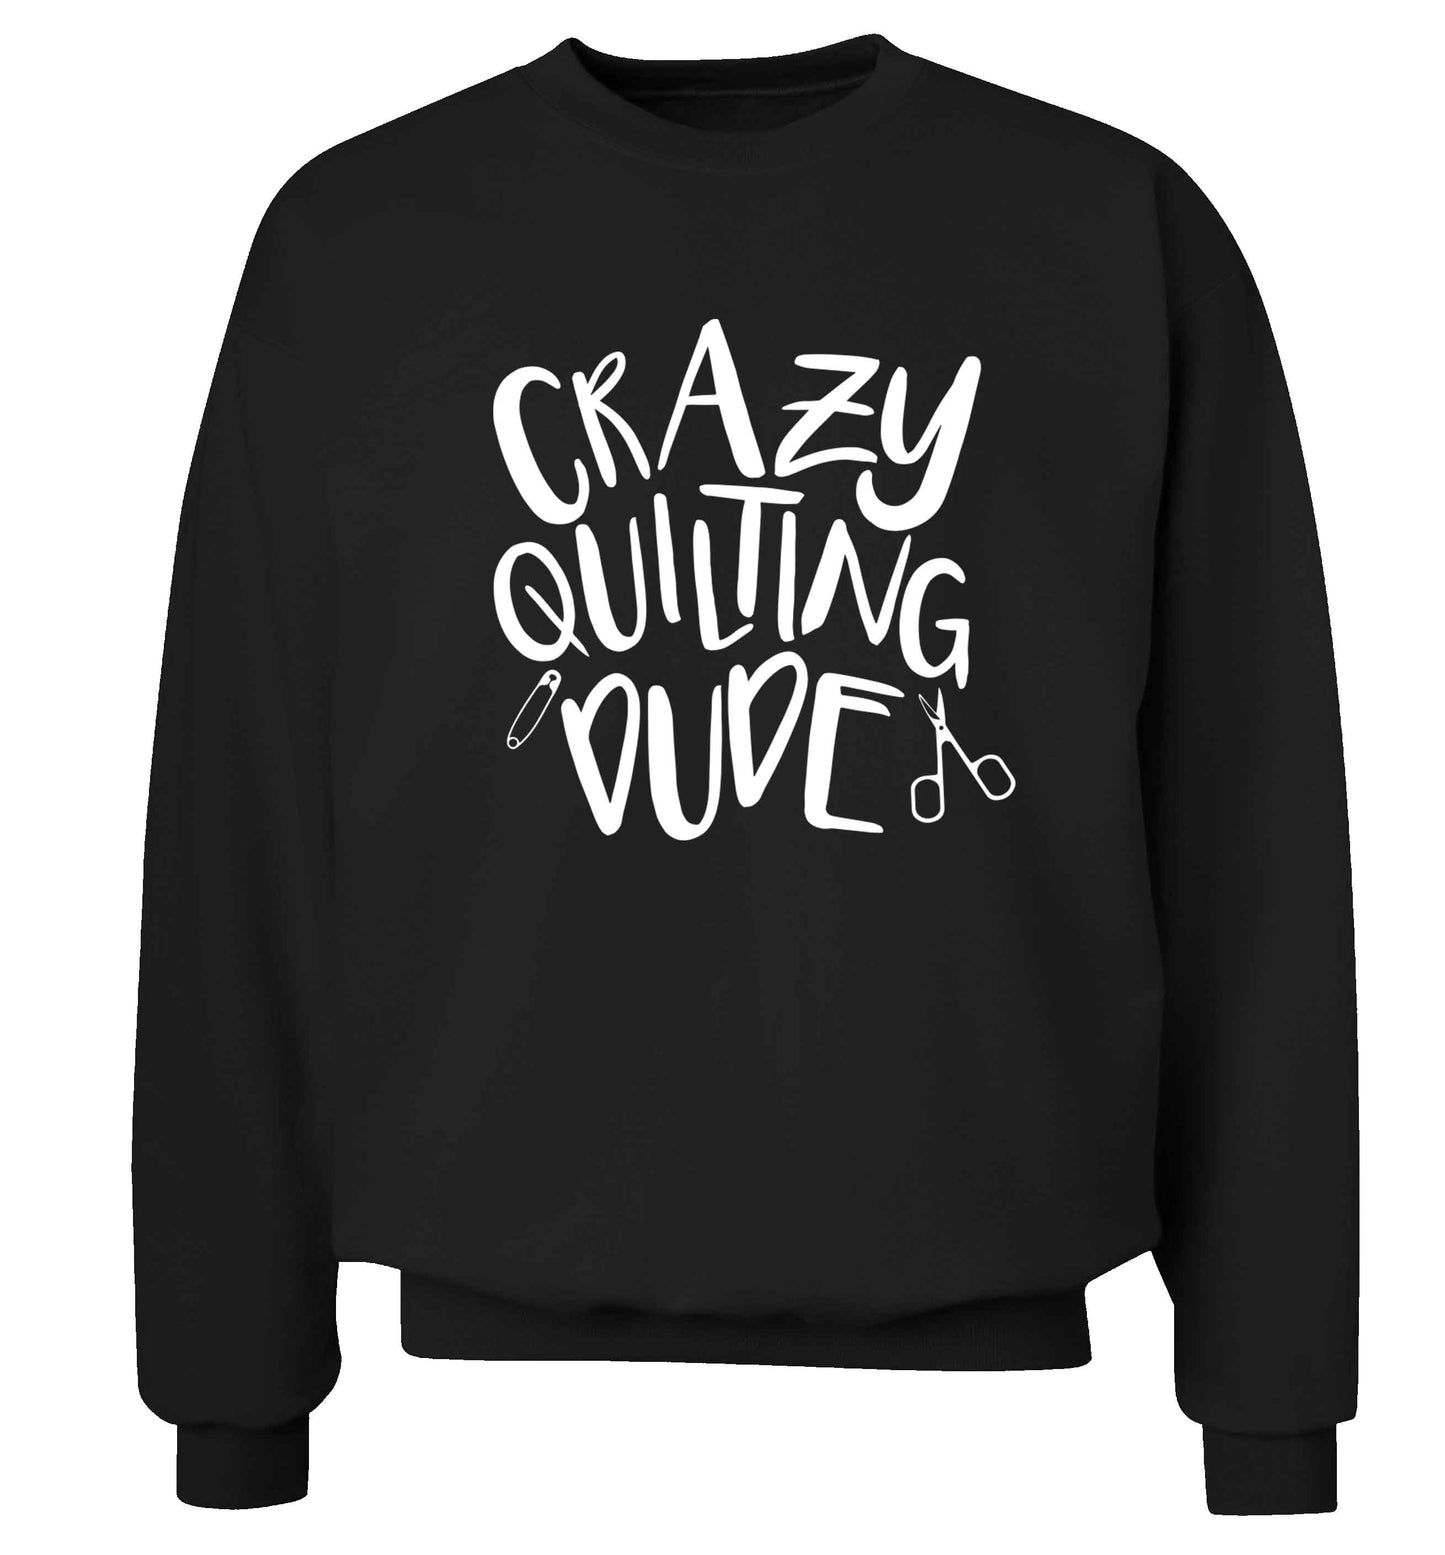 Crazy quilting dude Adult's unisex black Sweater 2XL